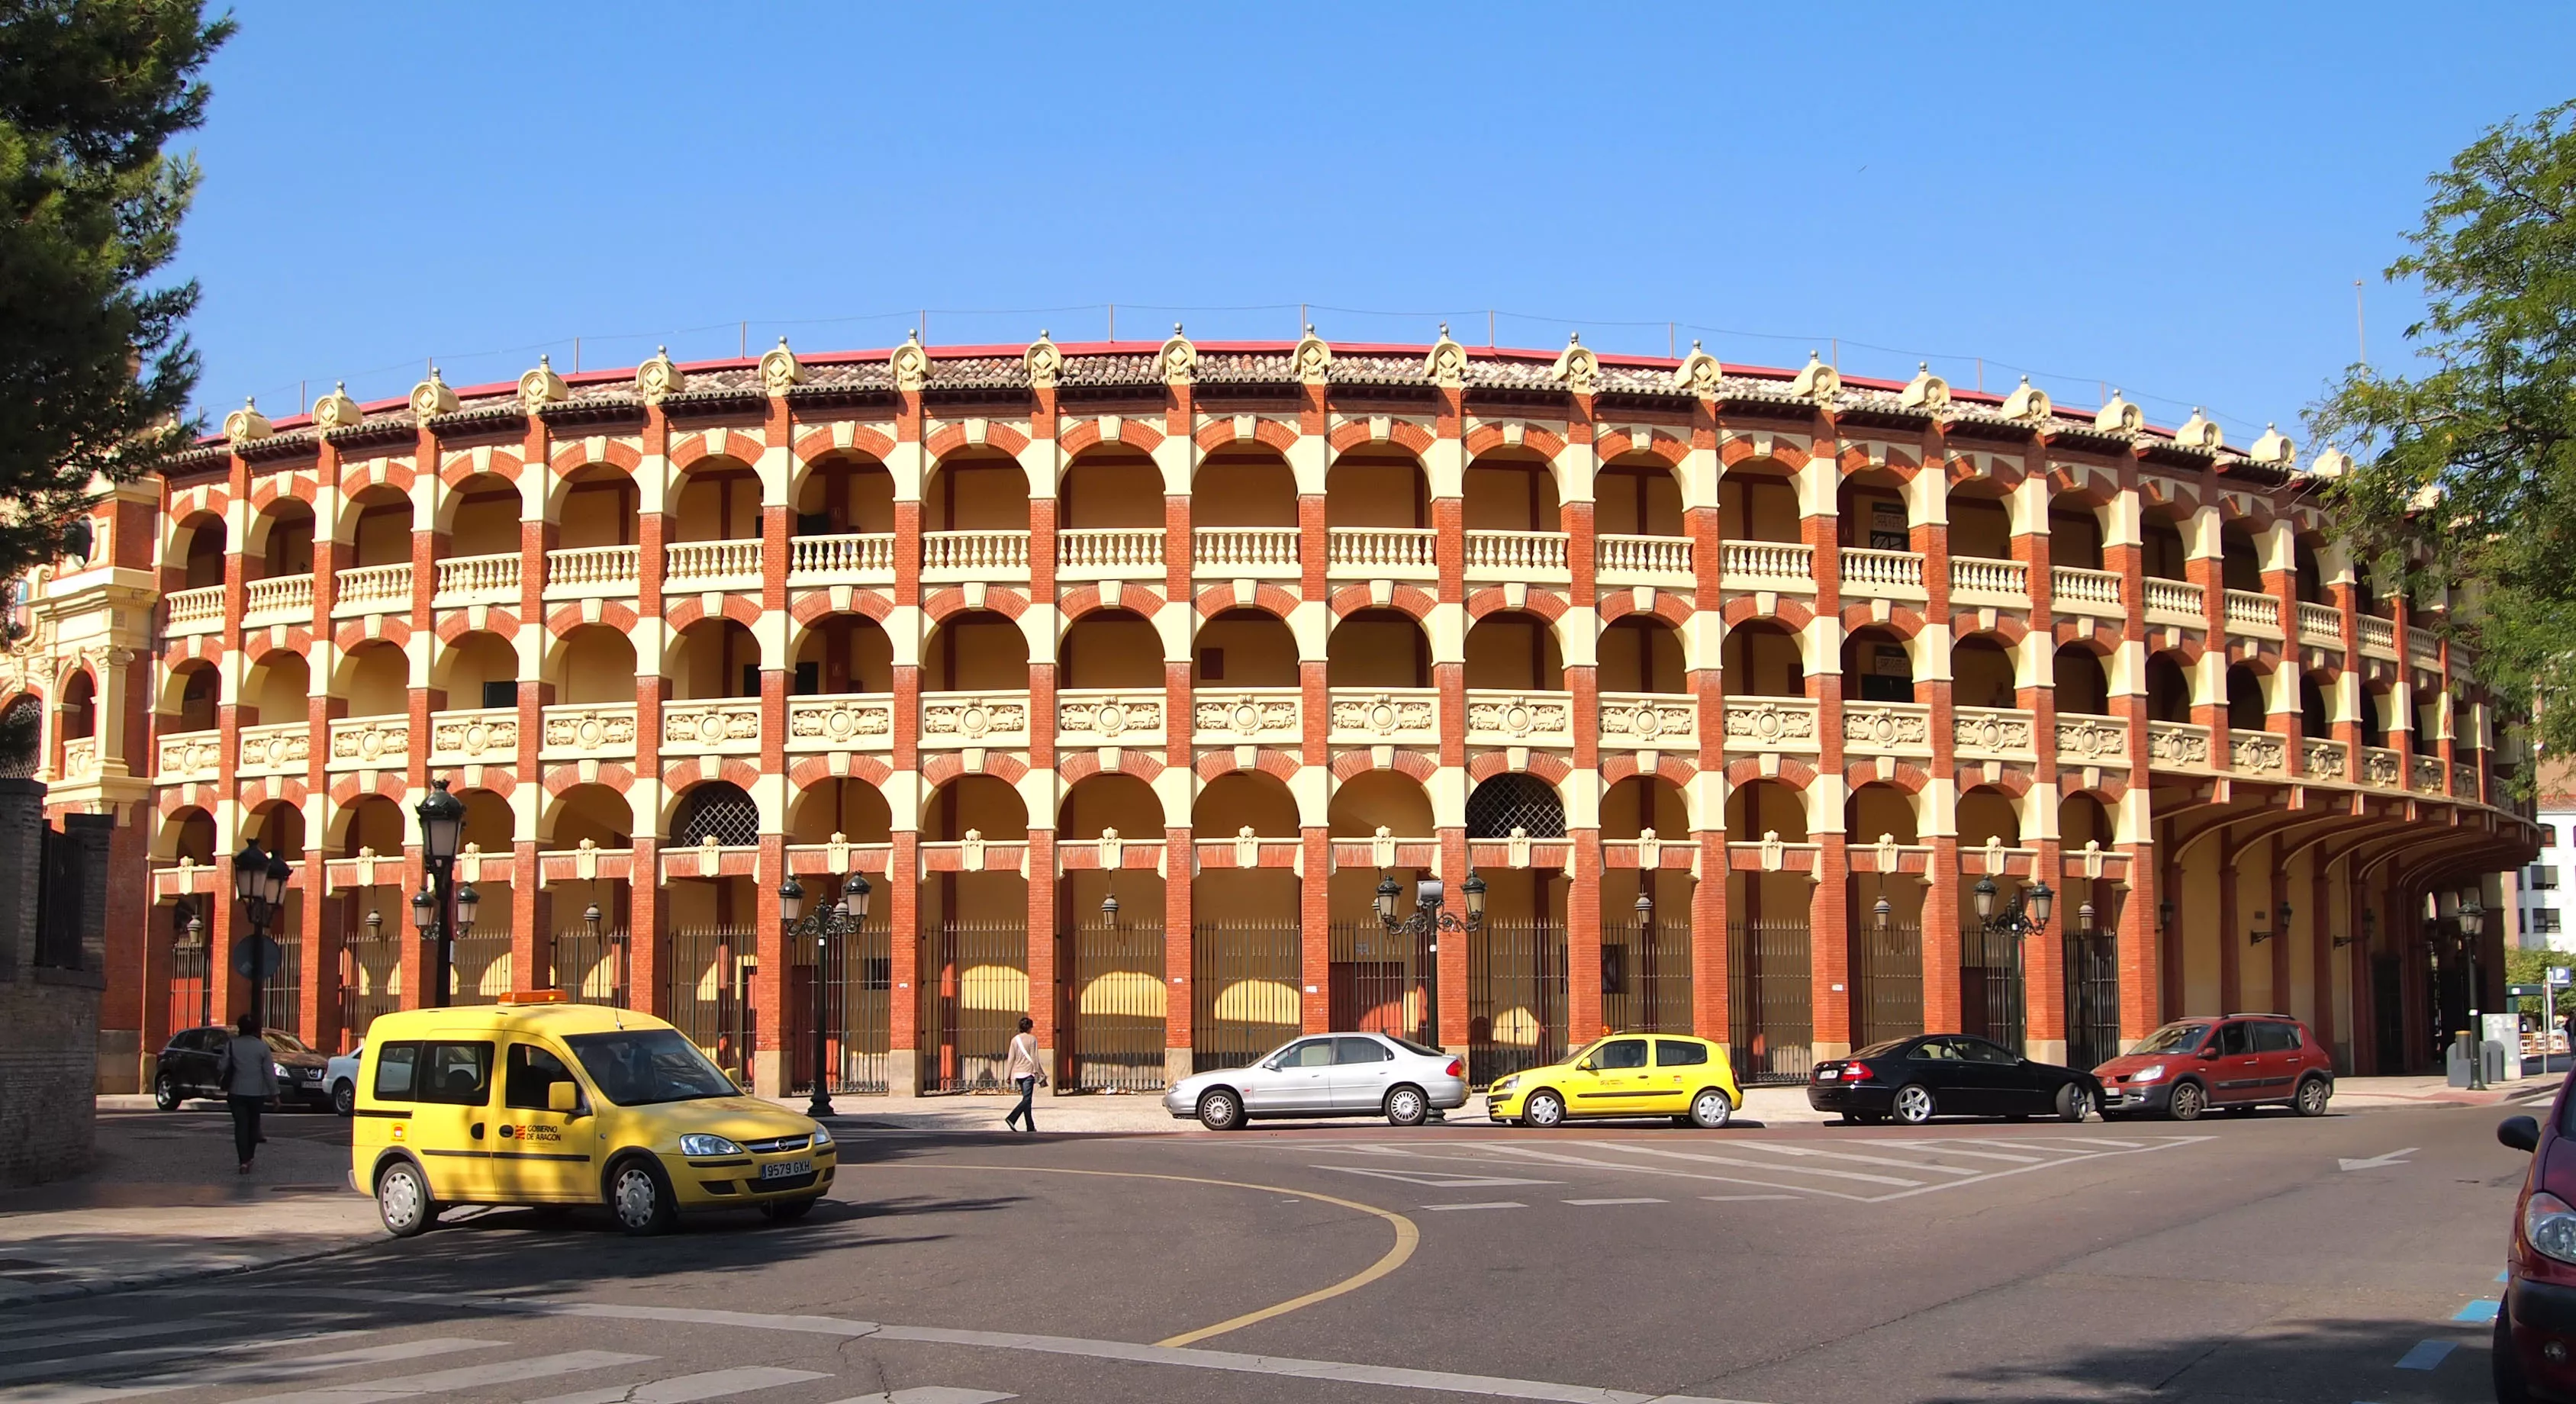 Plaza de toros de Zaragoza in Spain, Europe | Shows - Rated 3.8